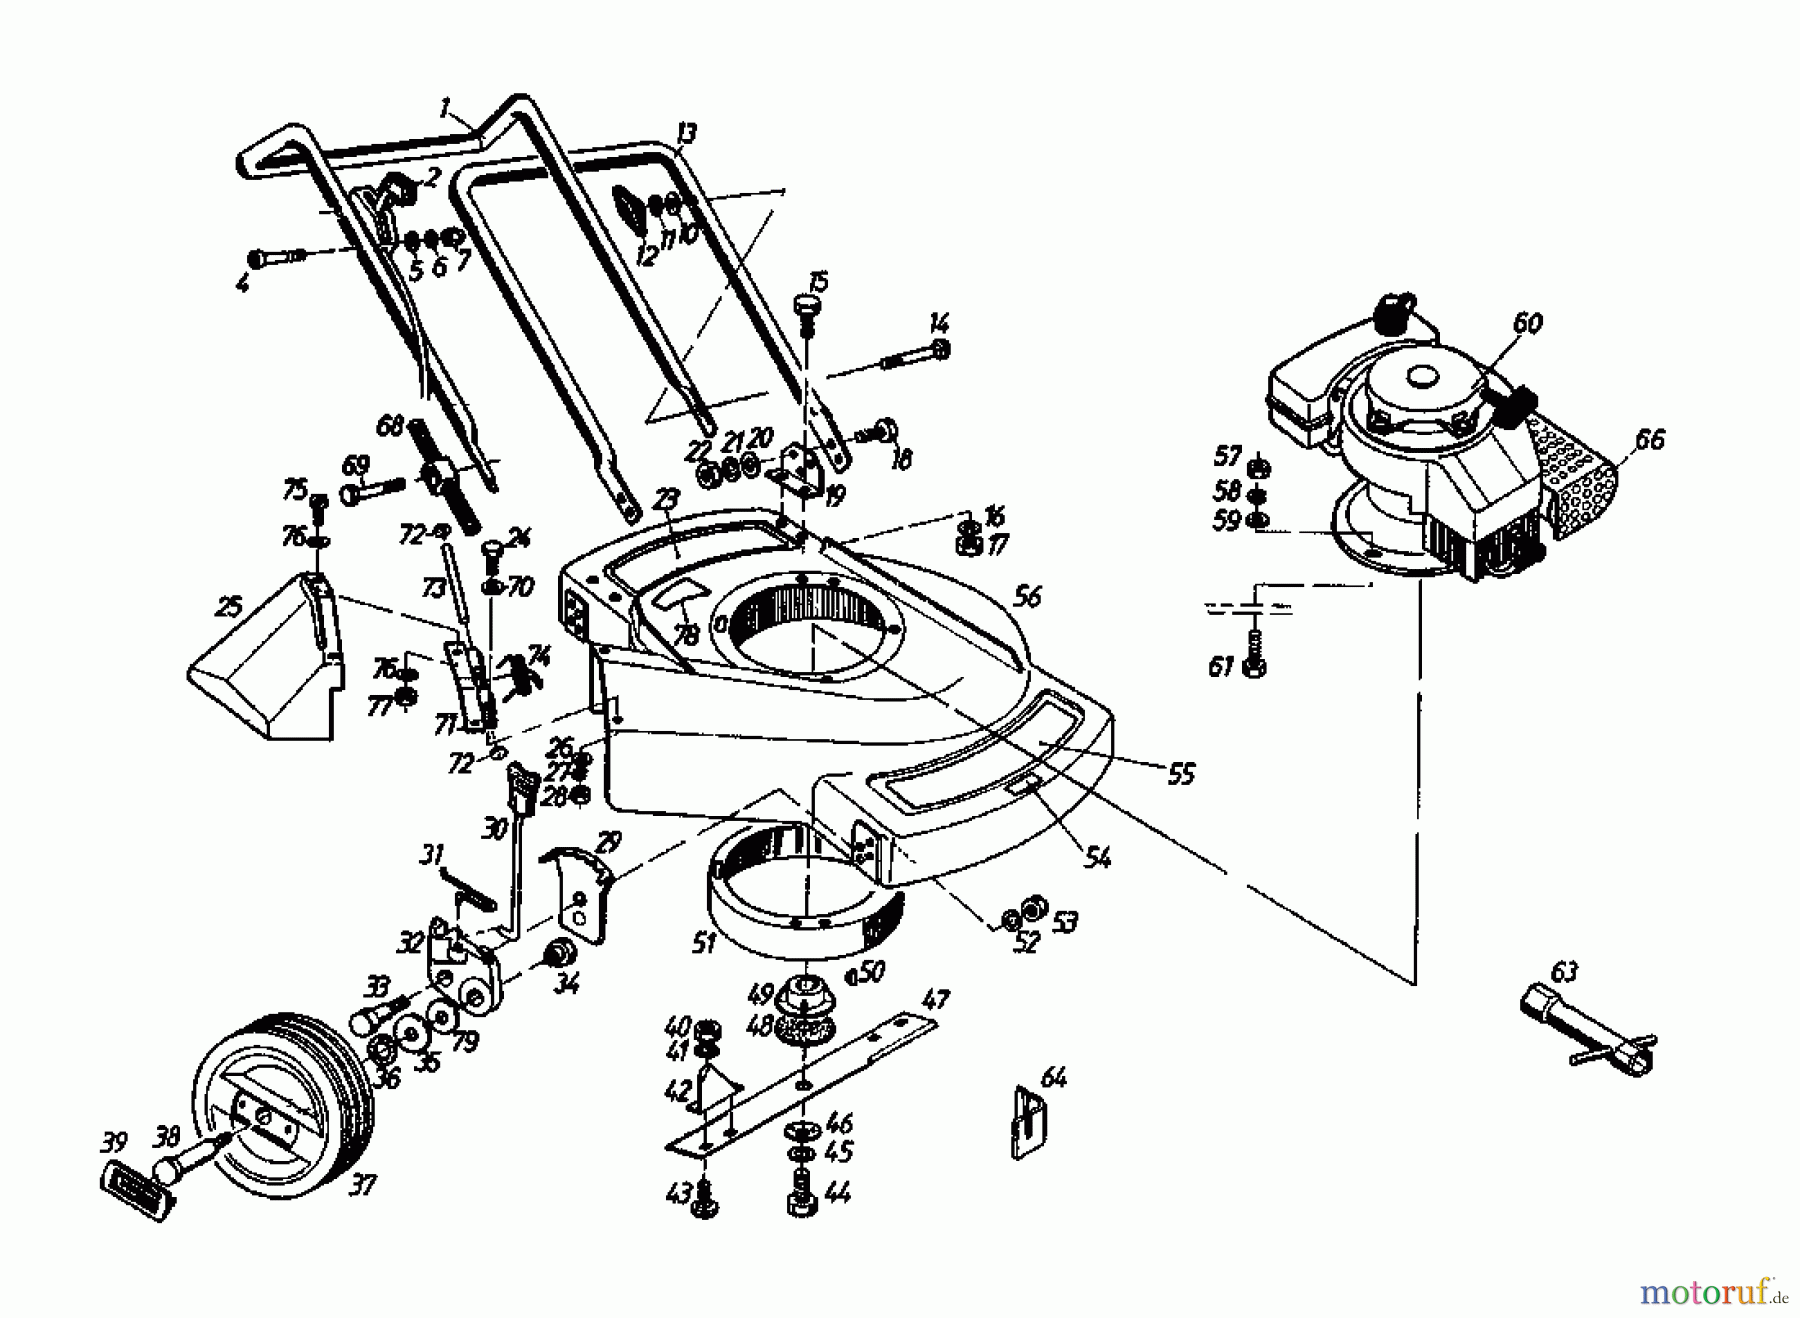  Gutbrod Petrol mower 135 BL 2 T 02869.06  (1987) Basic machine